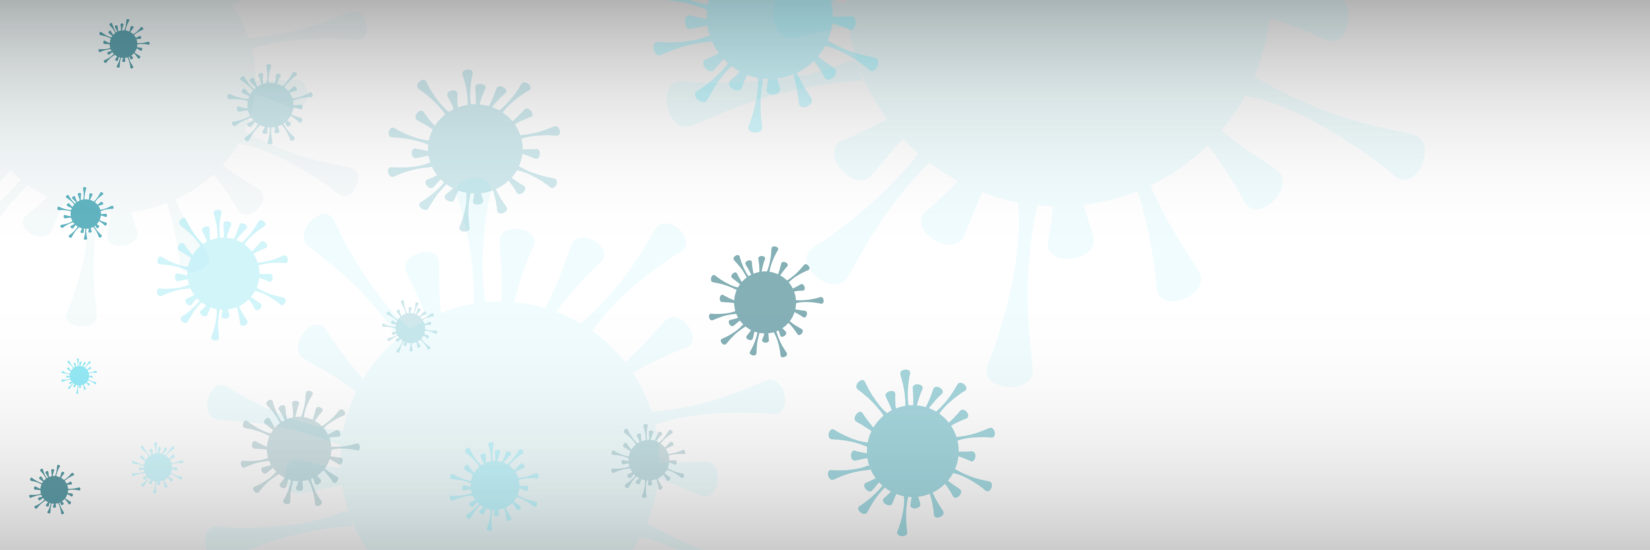 coronavirus abstract background